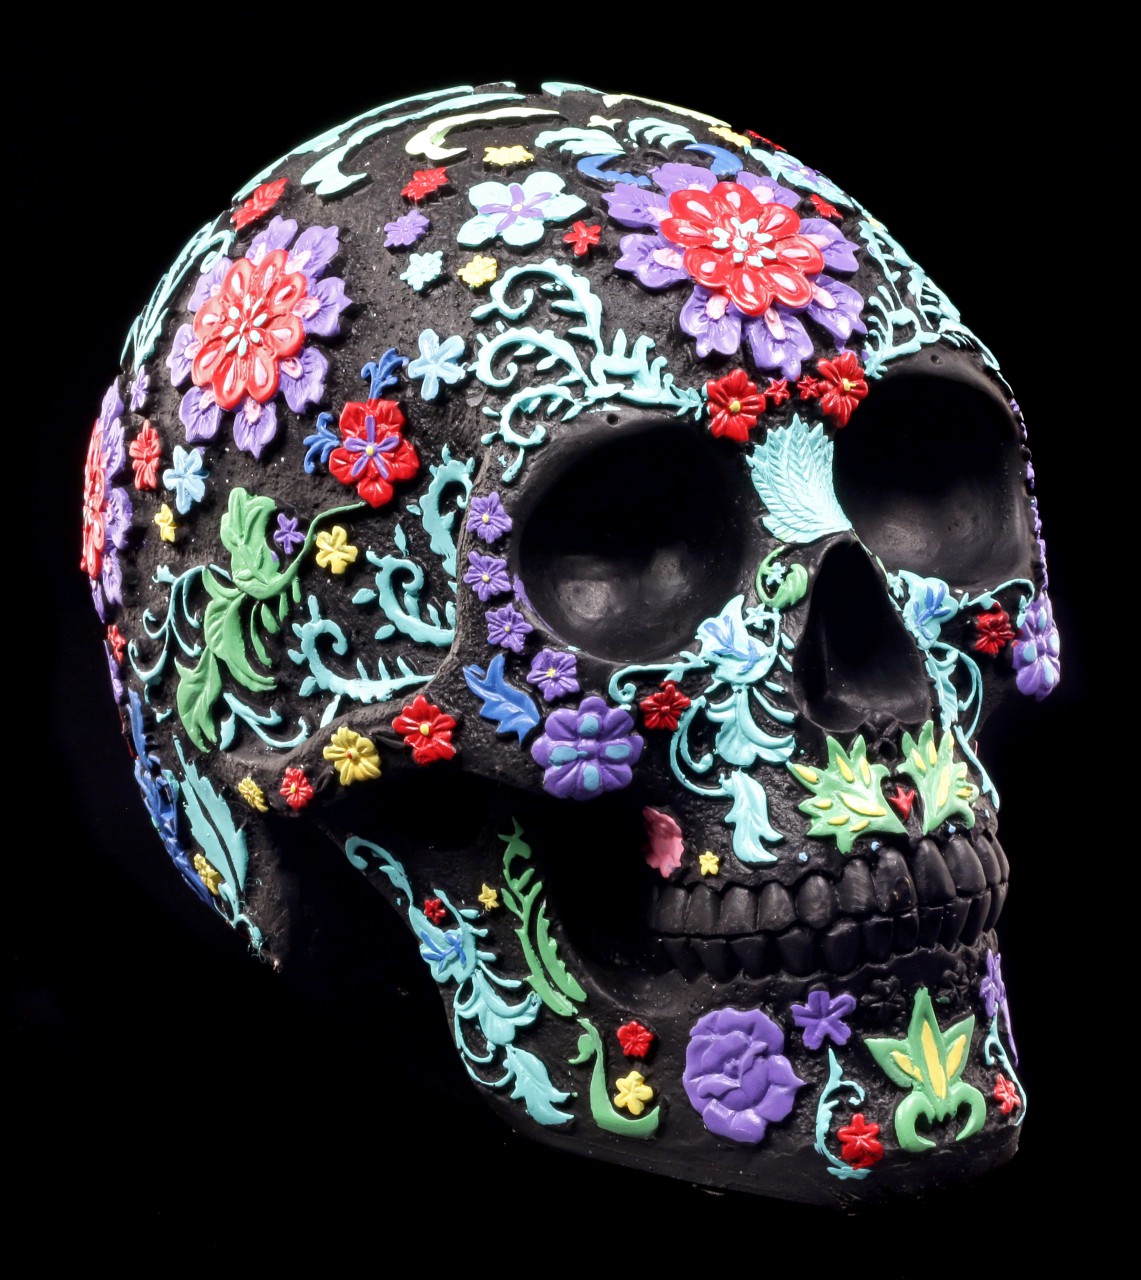 Black Skull with Colorful Floral Design